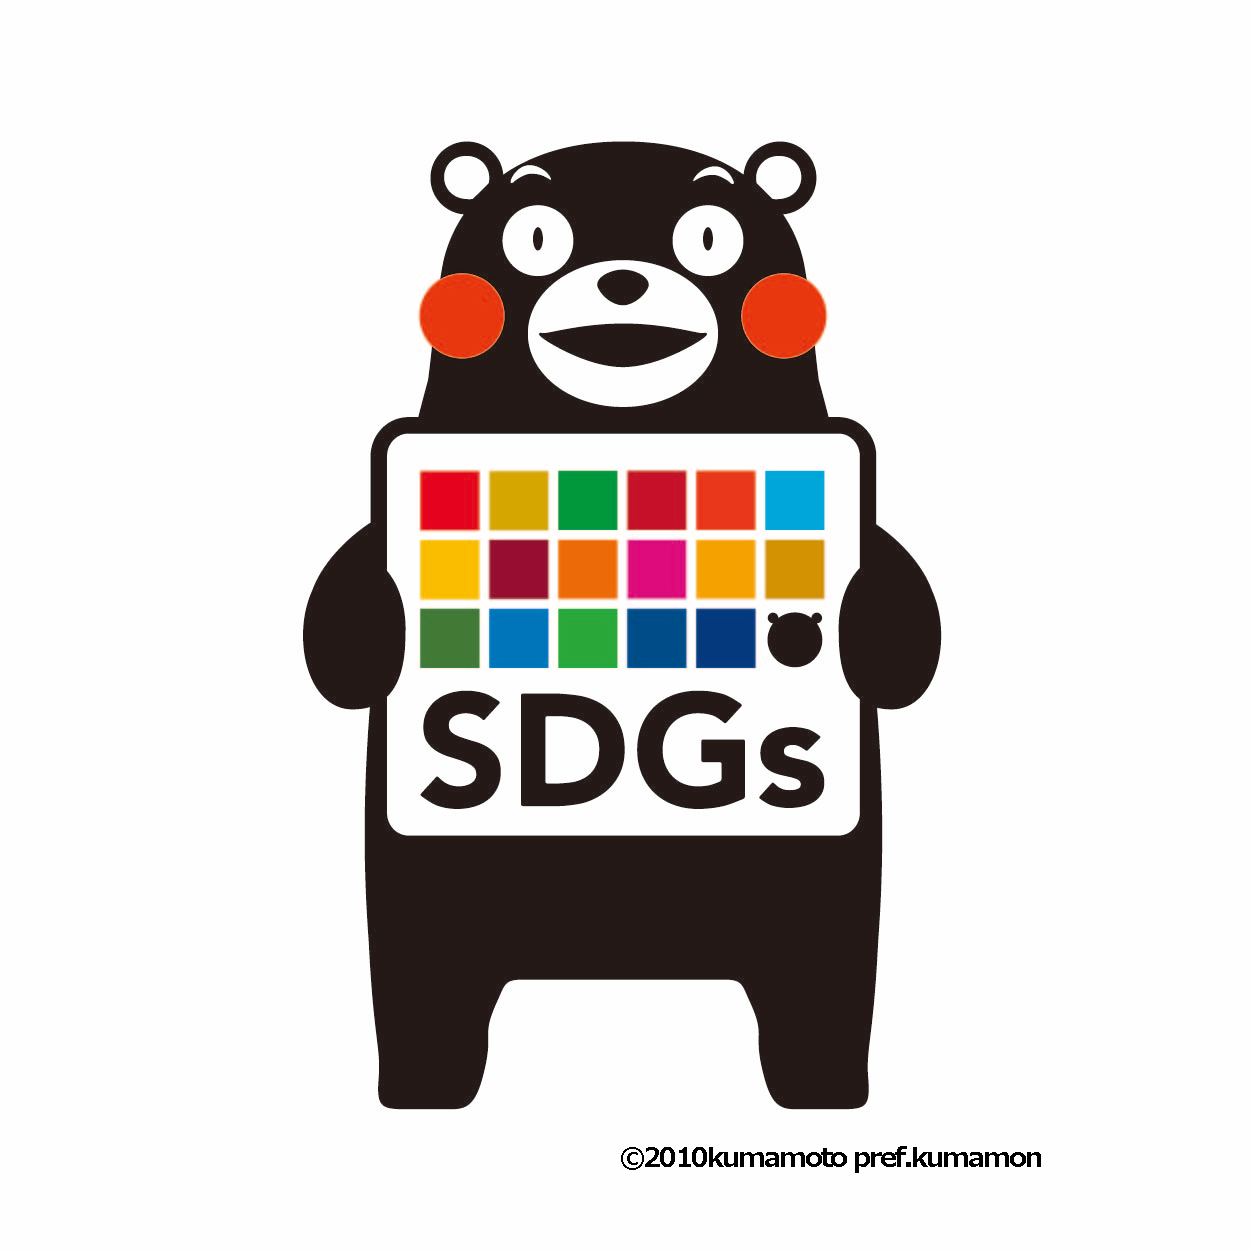 sdgs-logomark